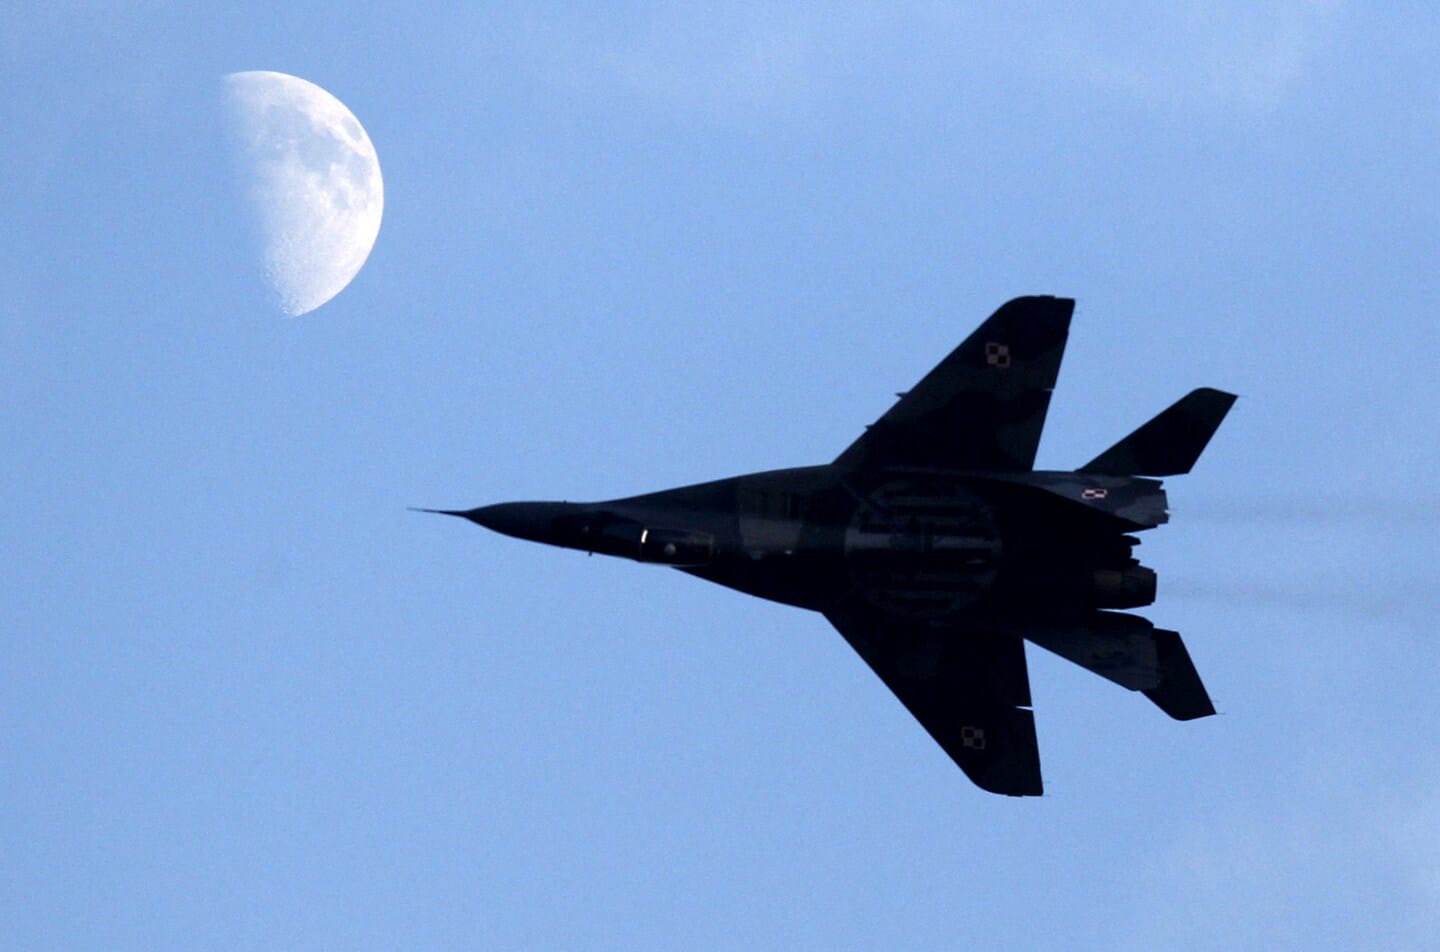 GOP senators urge Biden to help 'transfer aircraft' to Ukraine, criticize stance on Poland's MiG-29 offer